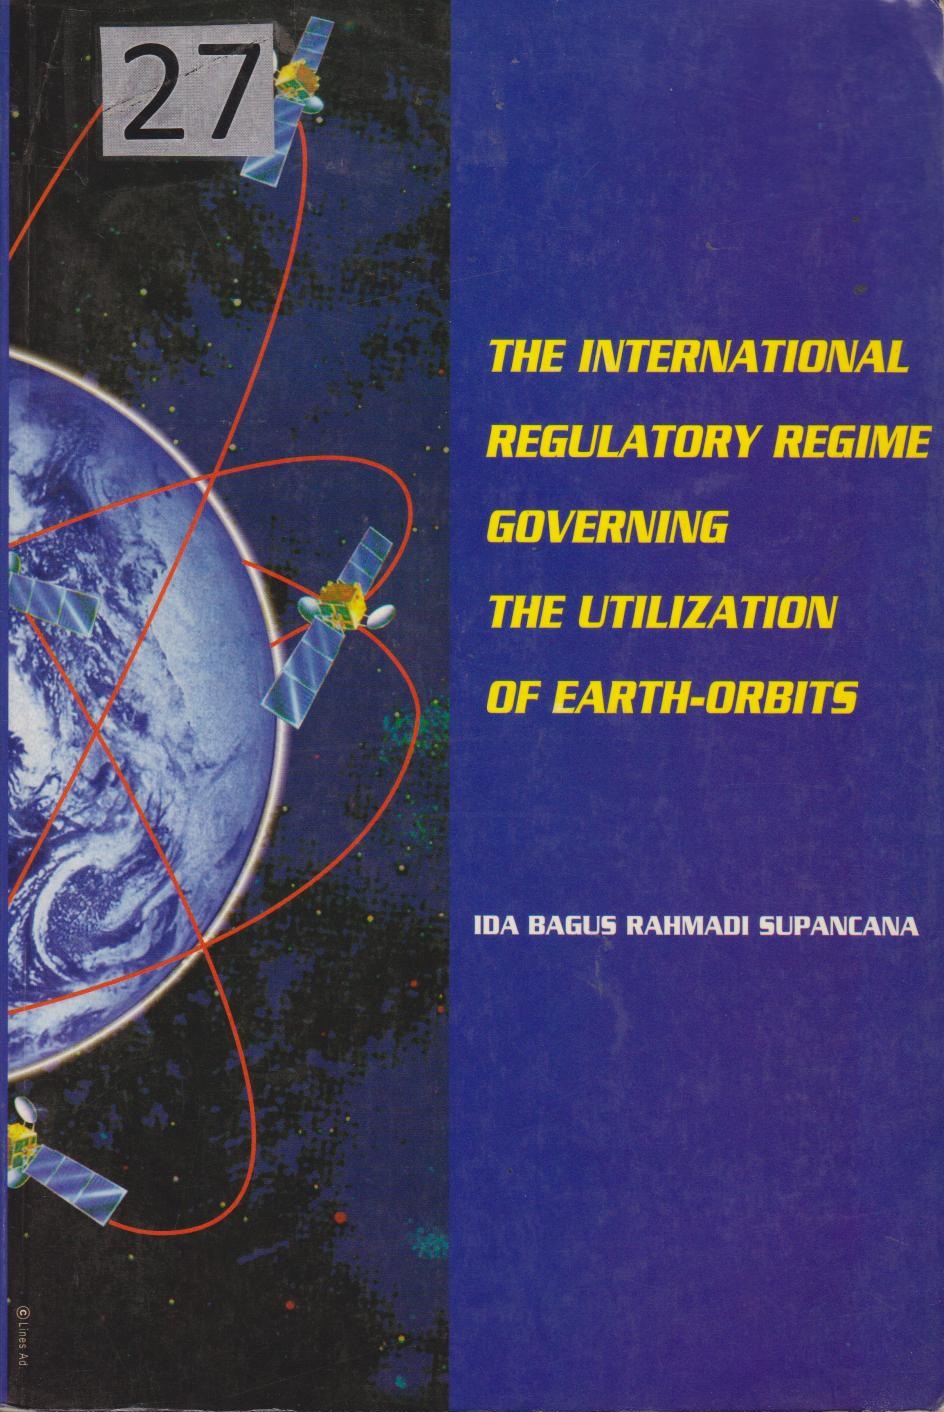 The International Regulatory Regime Governing The Utilization Of Earth-Orbits